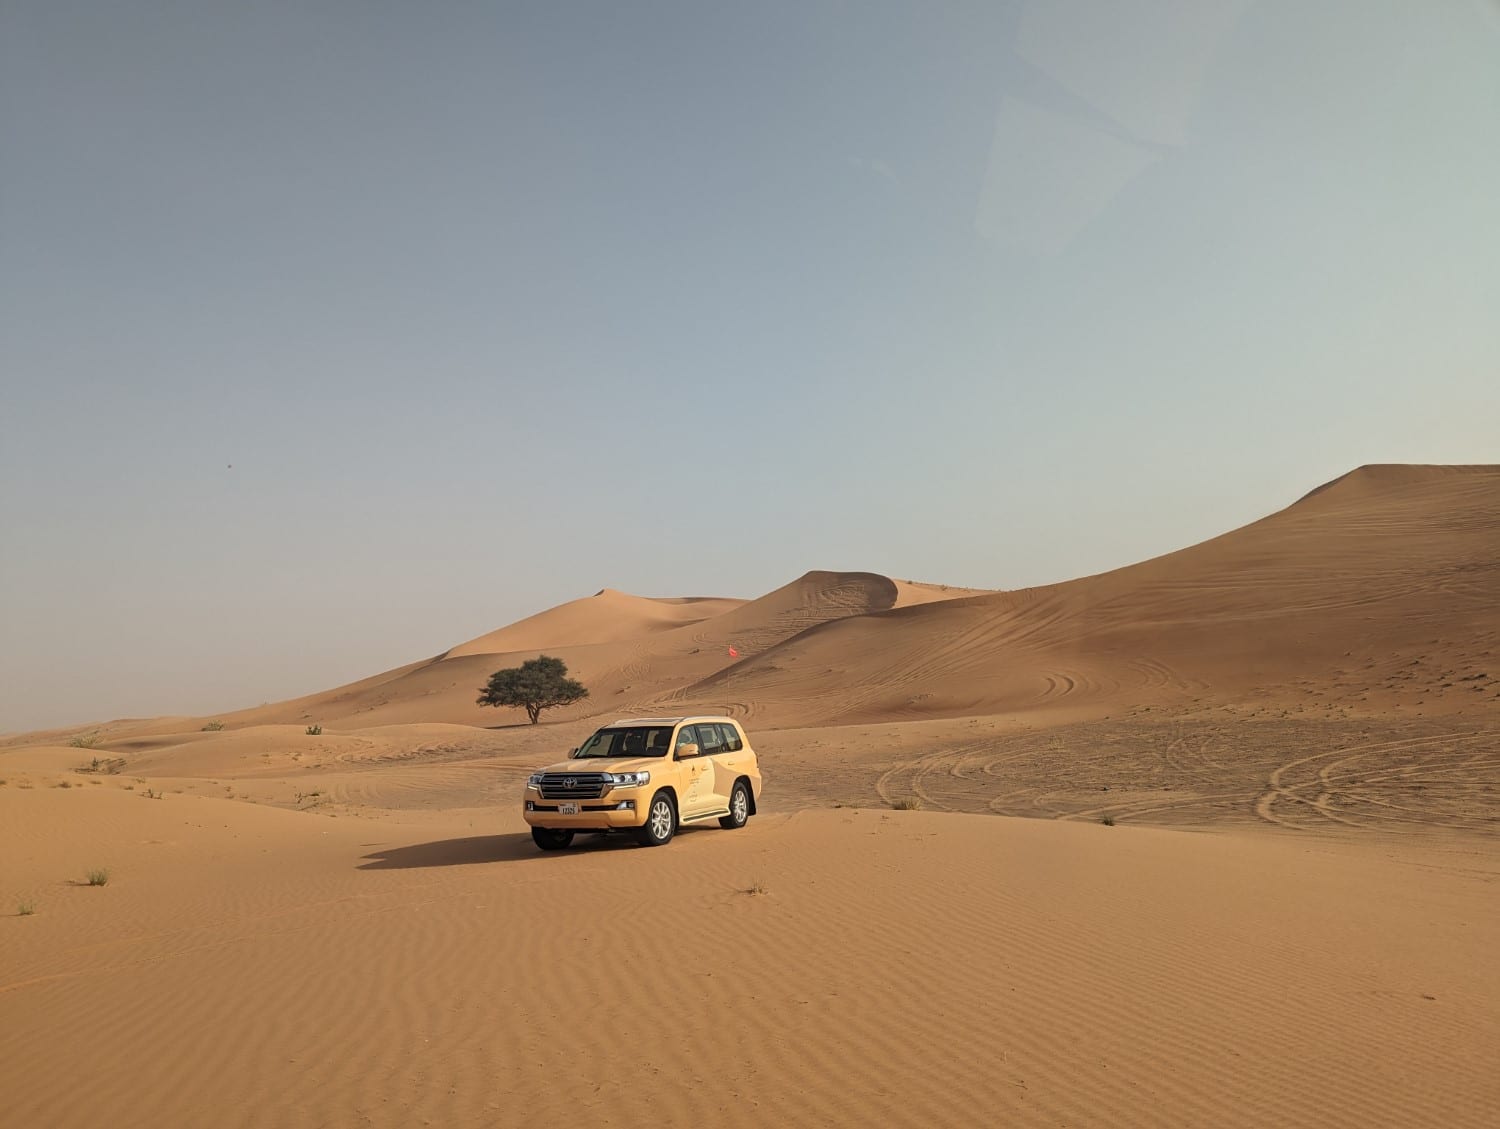 Dune bashing activity in the desert at Al Maha resort.